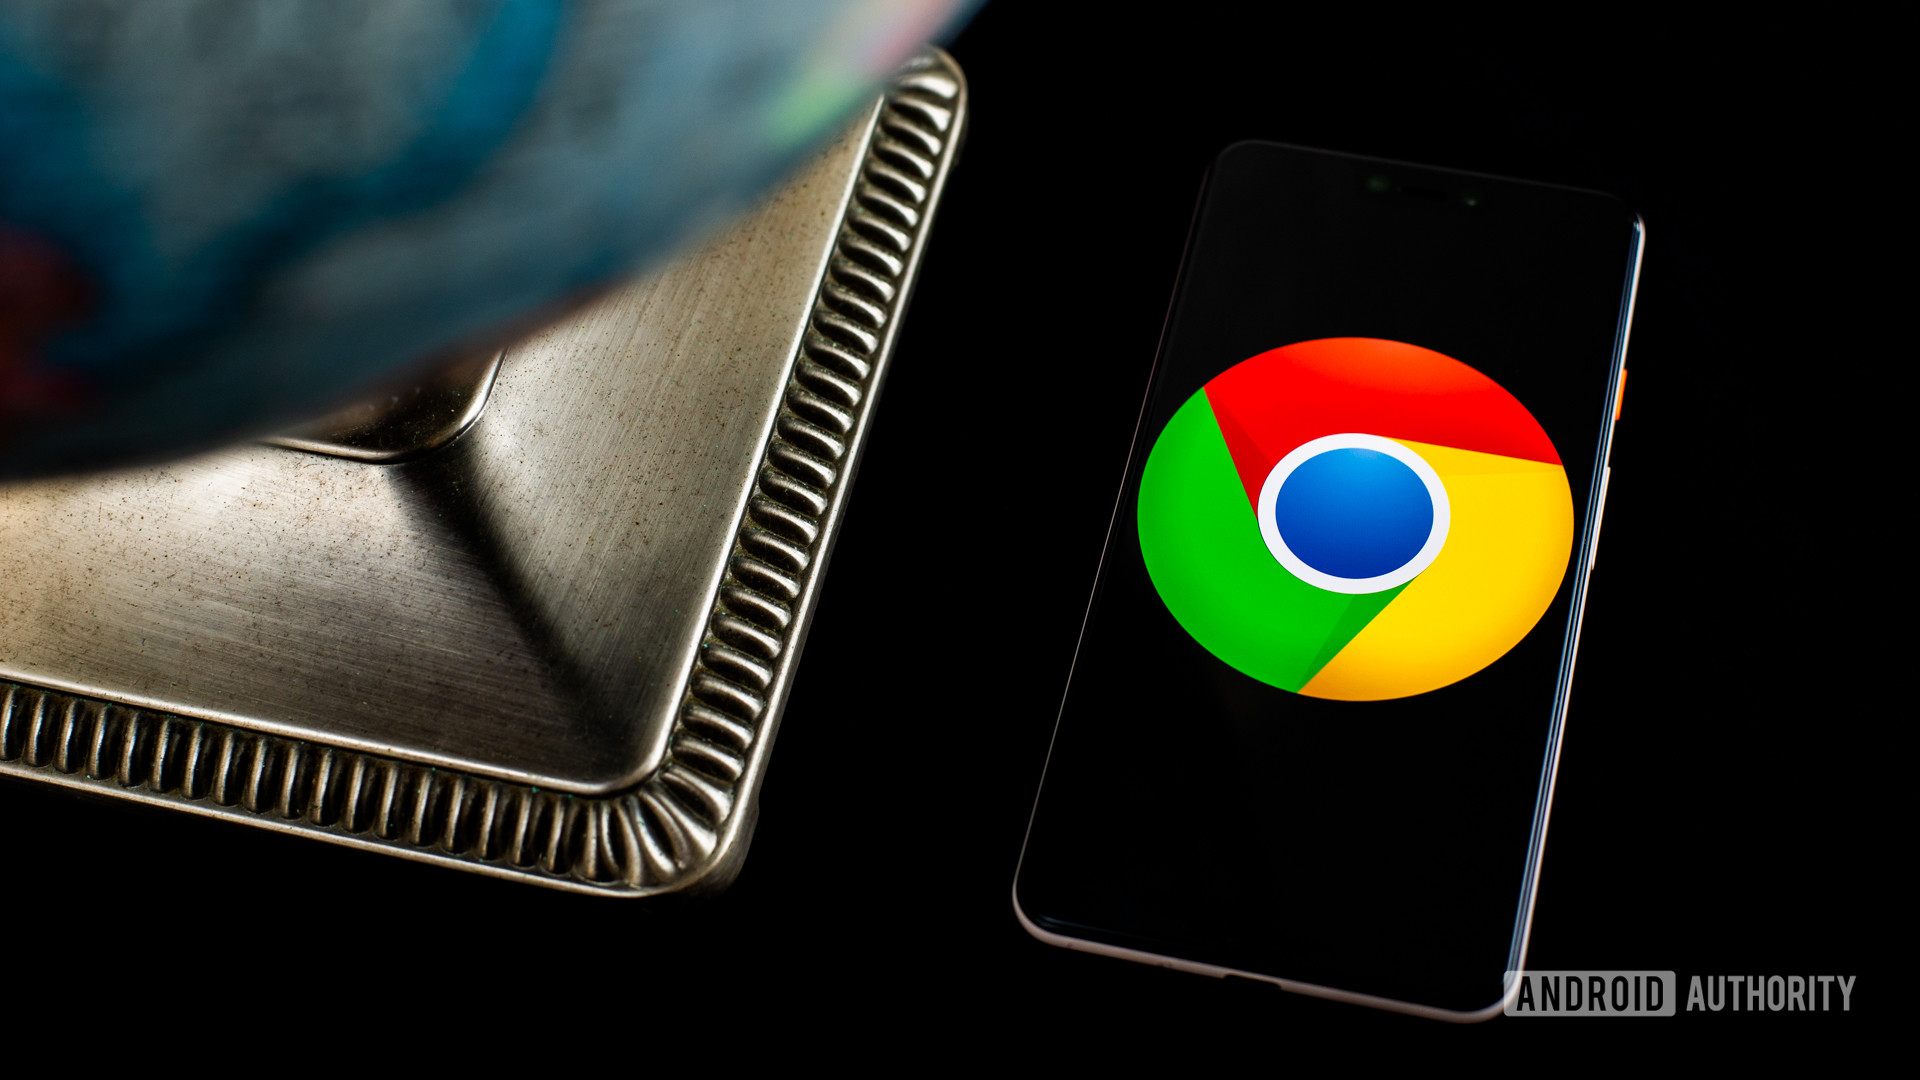 Chrome logo on smartphone next to globe